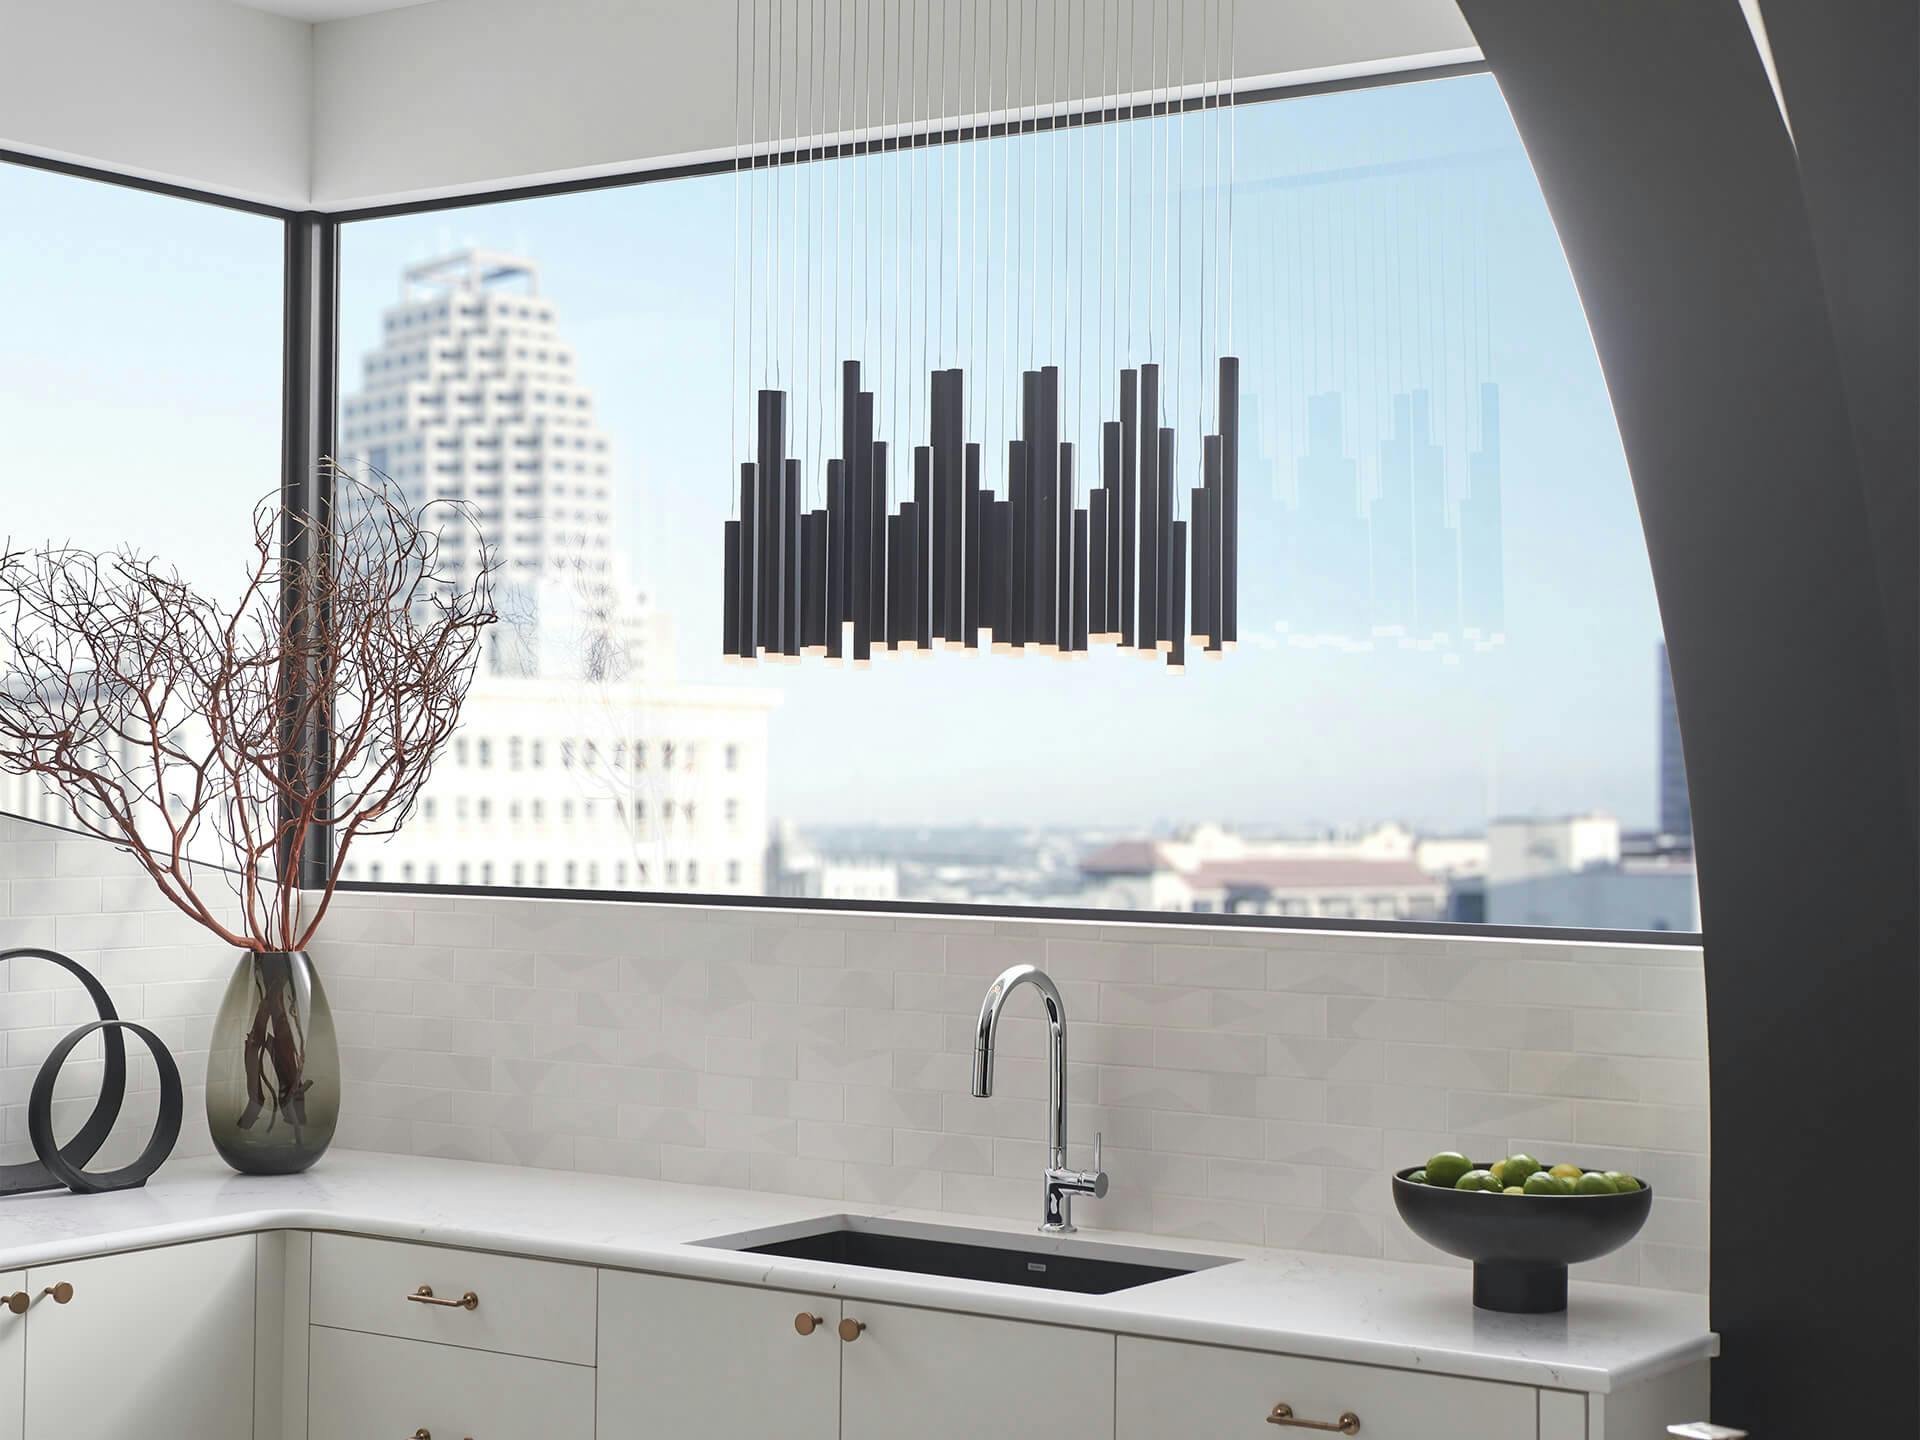 Soho 11 Light rectangular pendant cluster hanging over kitchen sink in high rise apartment